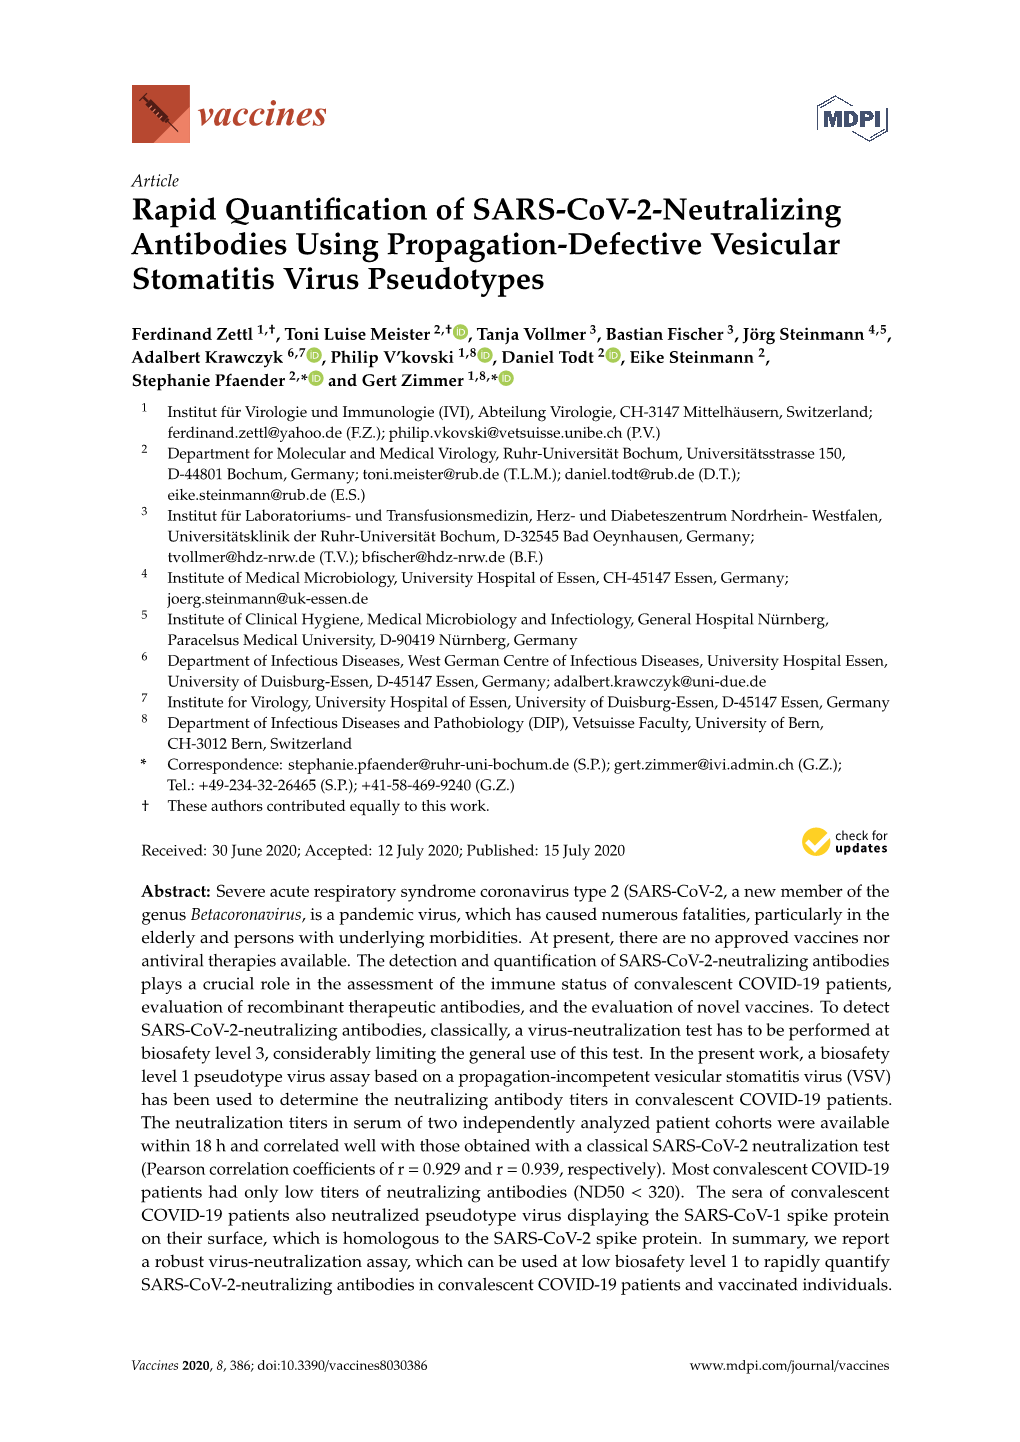 Rapid Quantification of SARS-Cov-2-Neutralizing Antibodies Using Propagation-Defective Vesicular Stomatitis Virus Pseudotypes